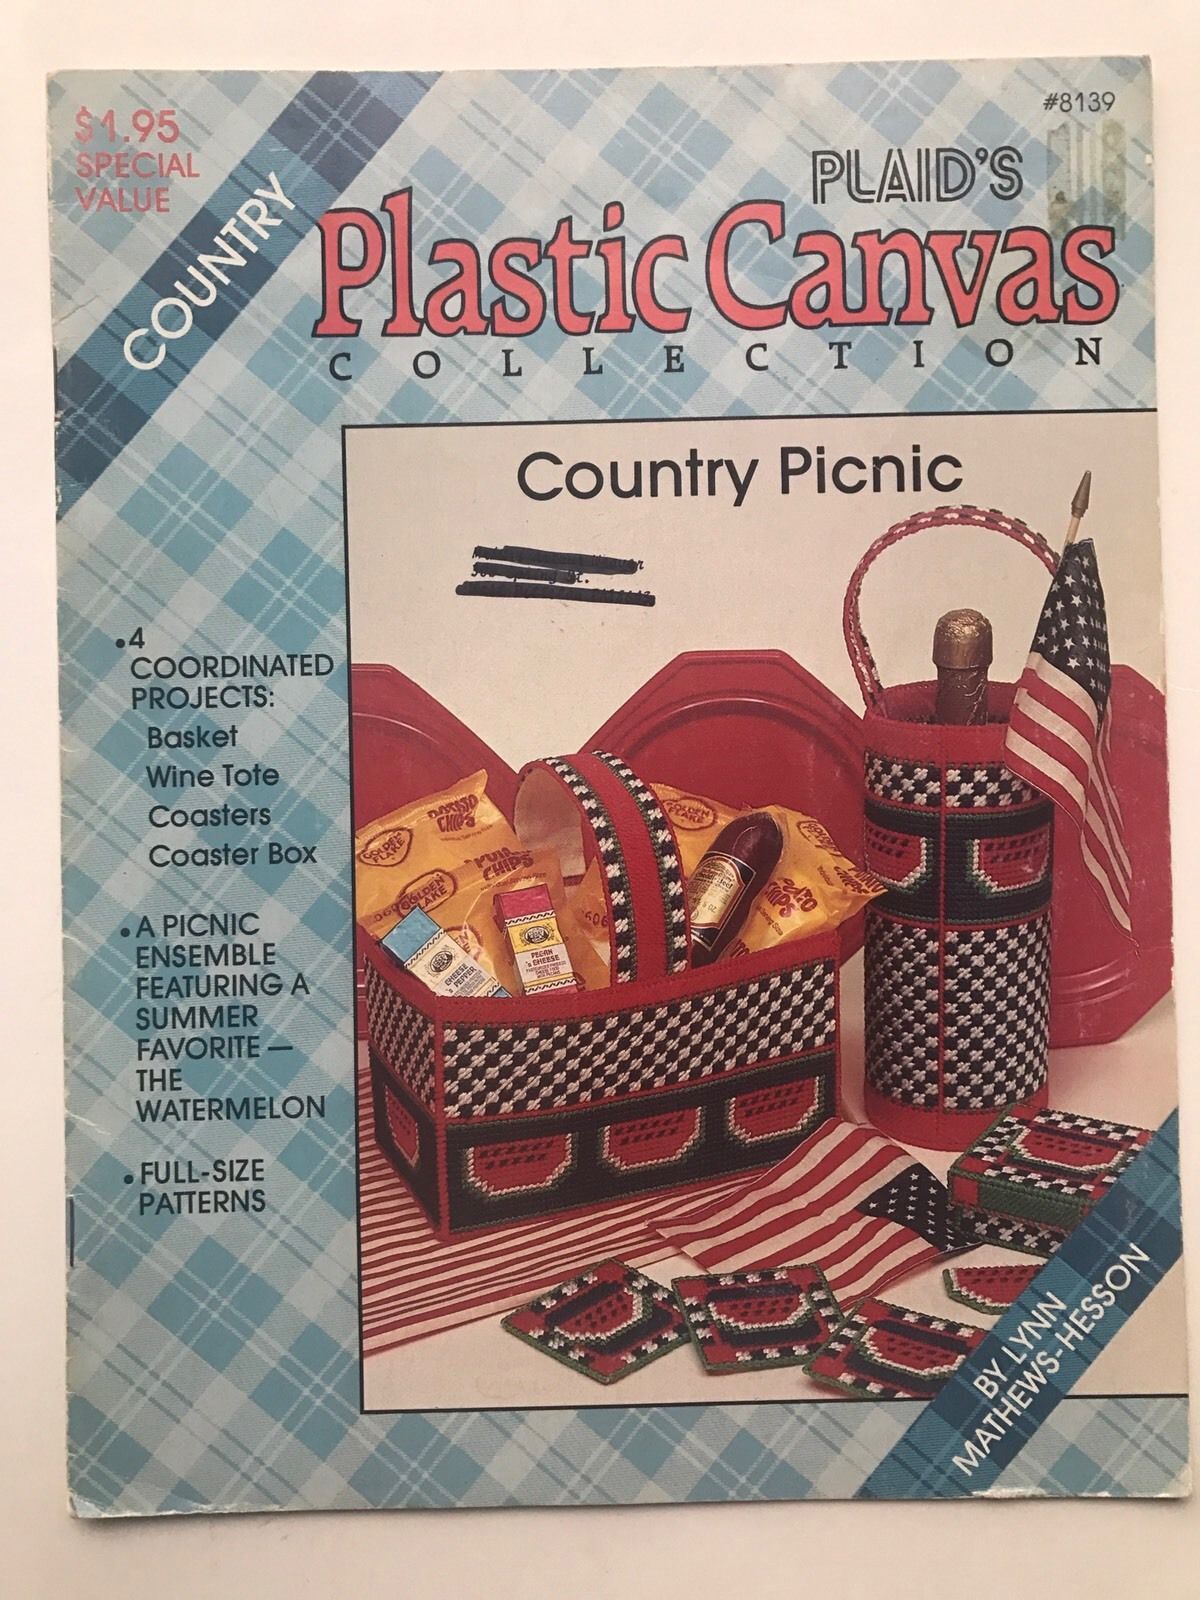 Vintage Plastic Canvas Leaflet 8139 Country Picnic Watermelon Print Plaid's Coll - $4.97